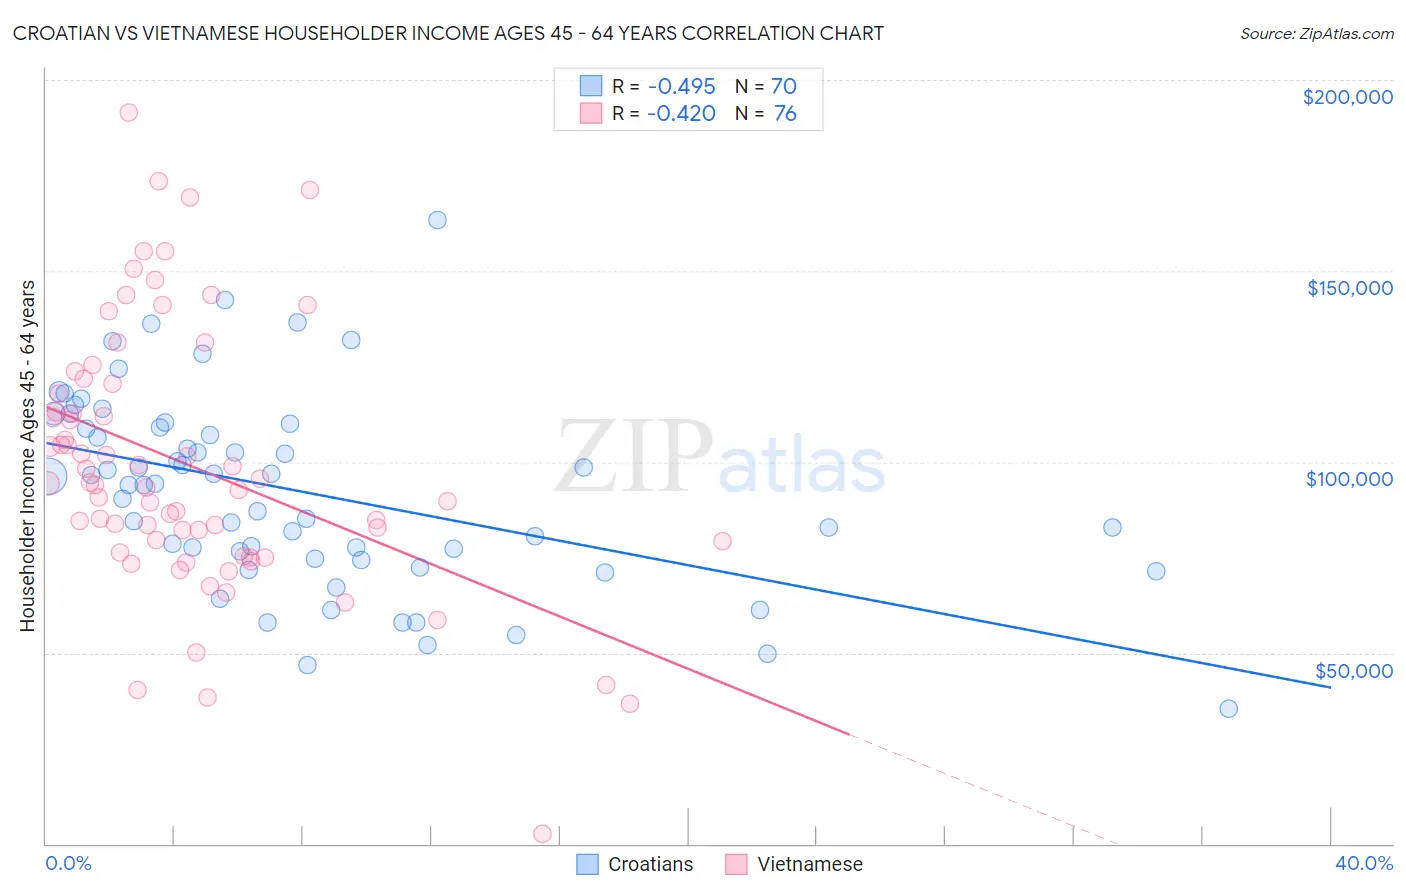 Croatian vs Vietnamese Householder Income Ages 45 - 64 years